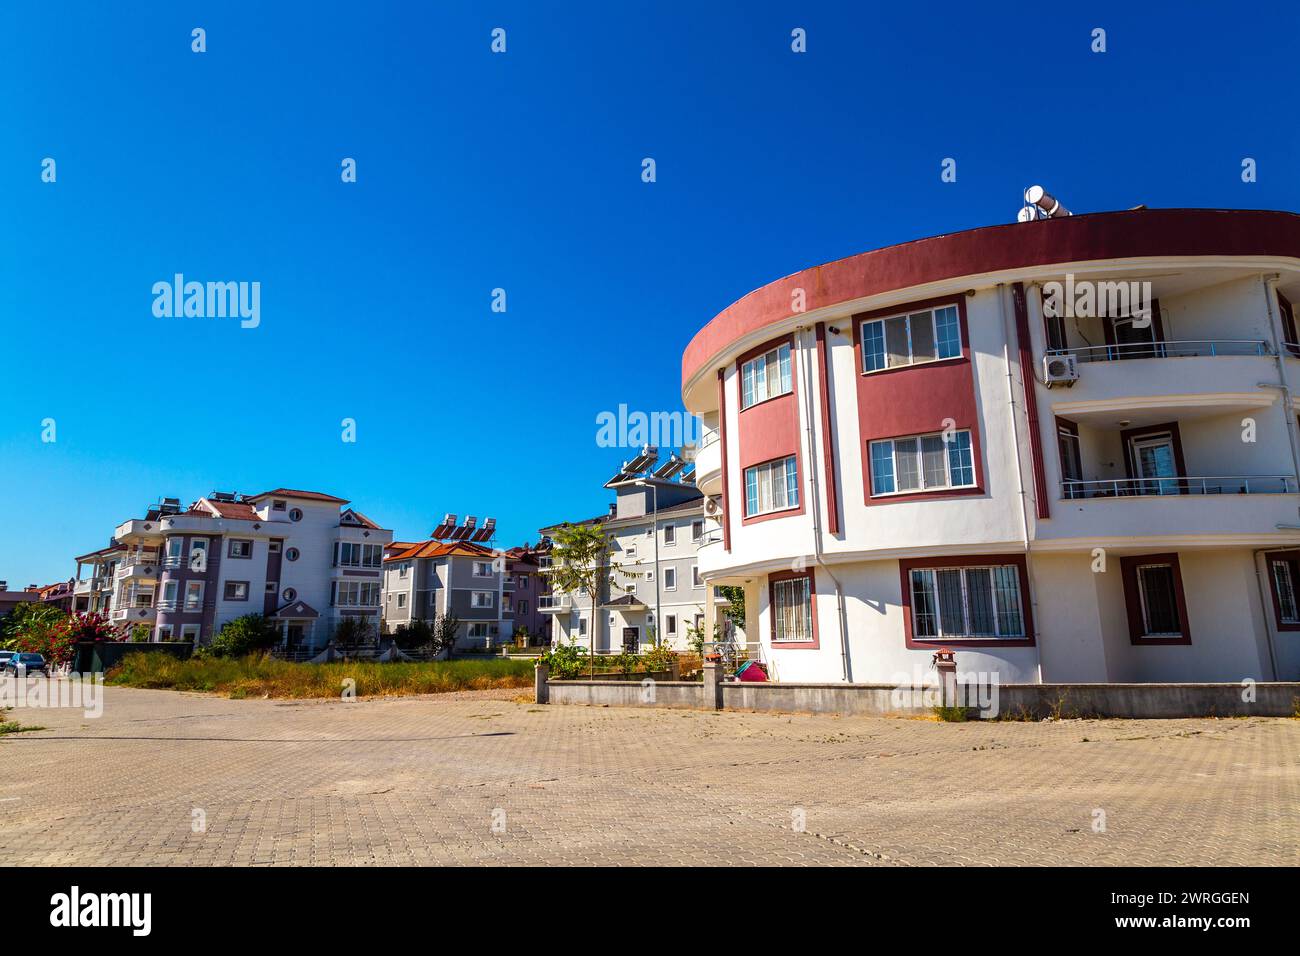 Residential houses in Dalaman, Turkey Stock Photo